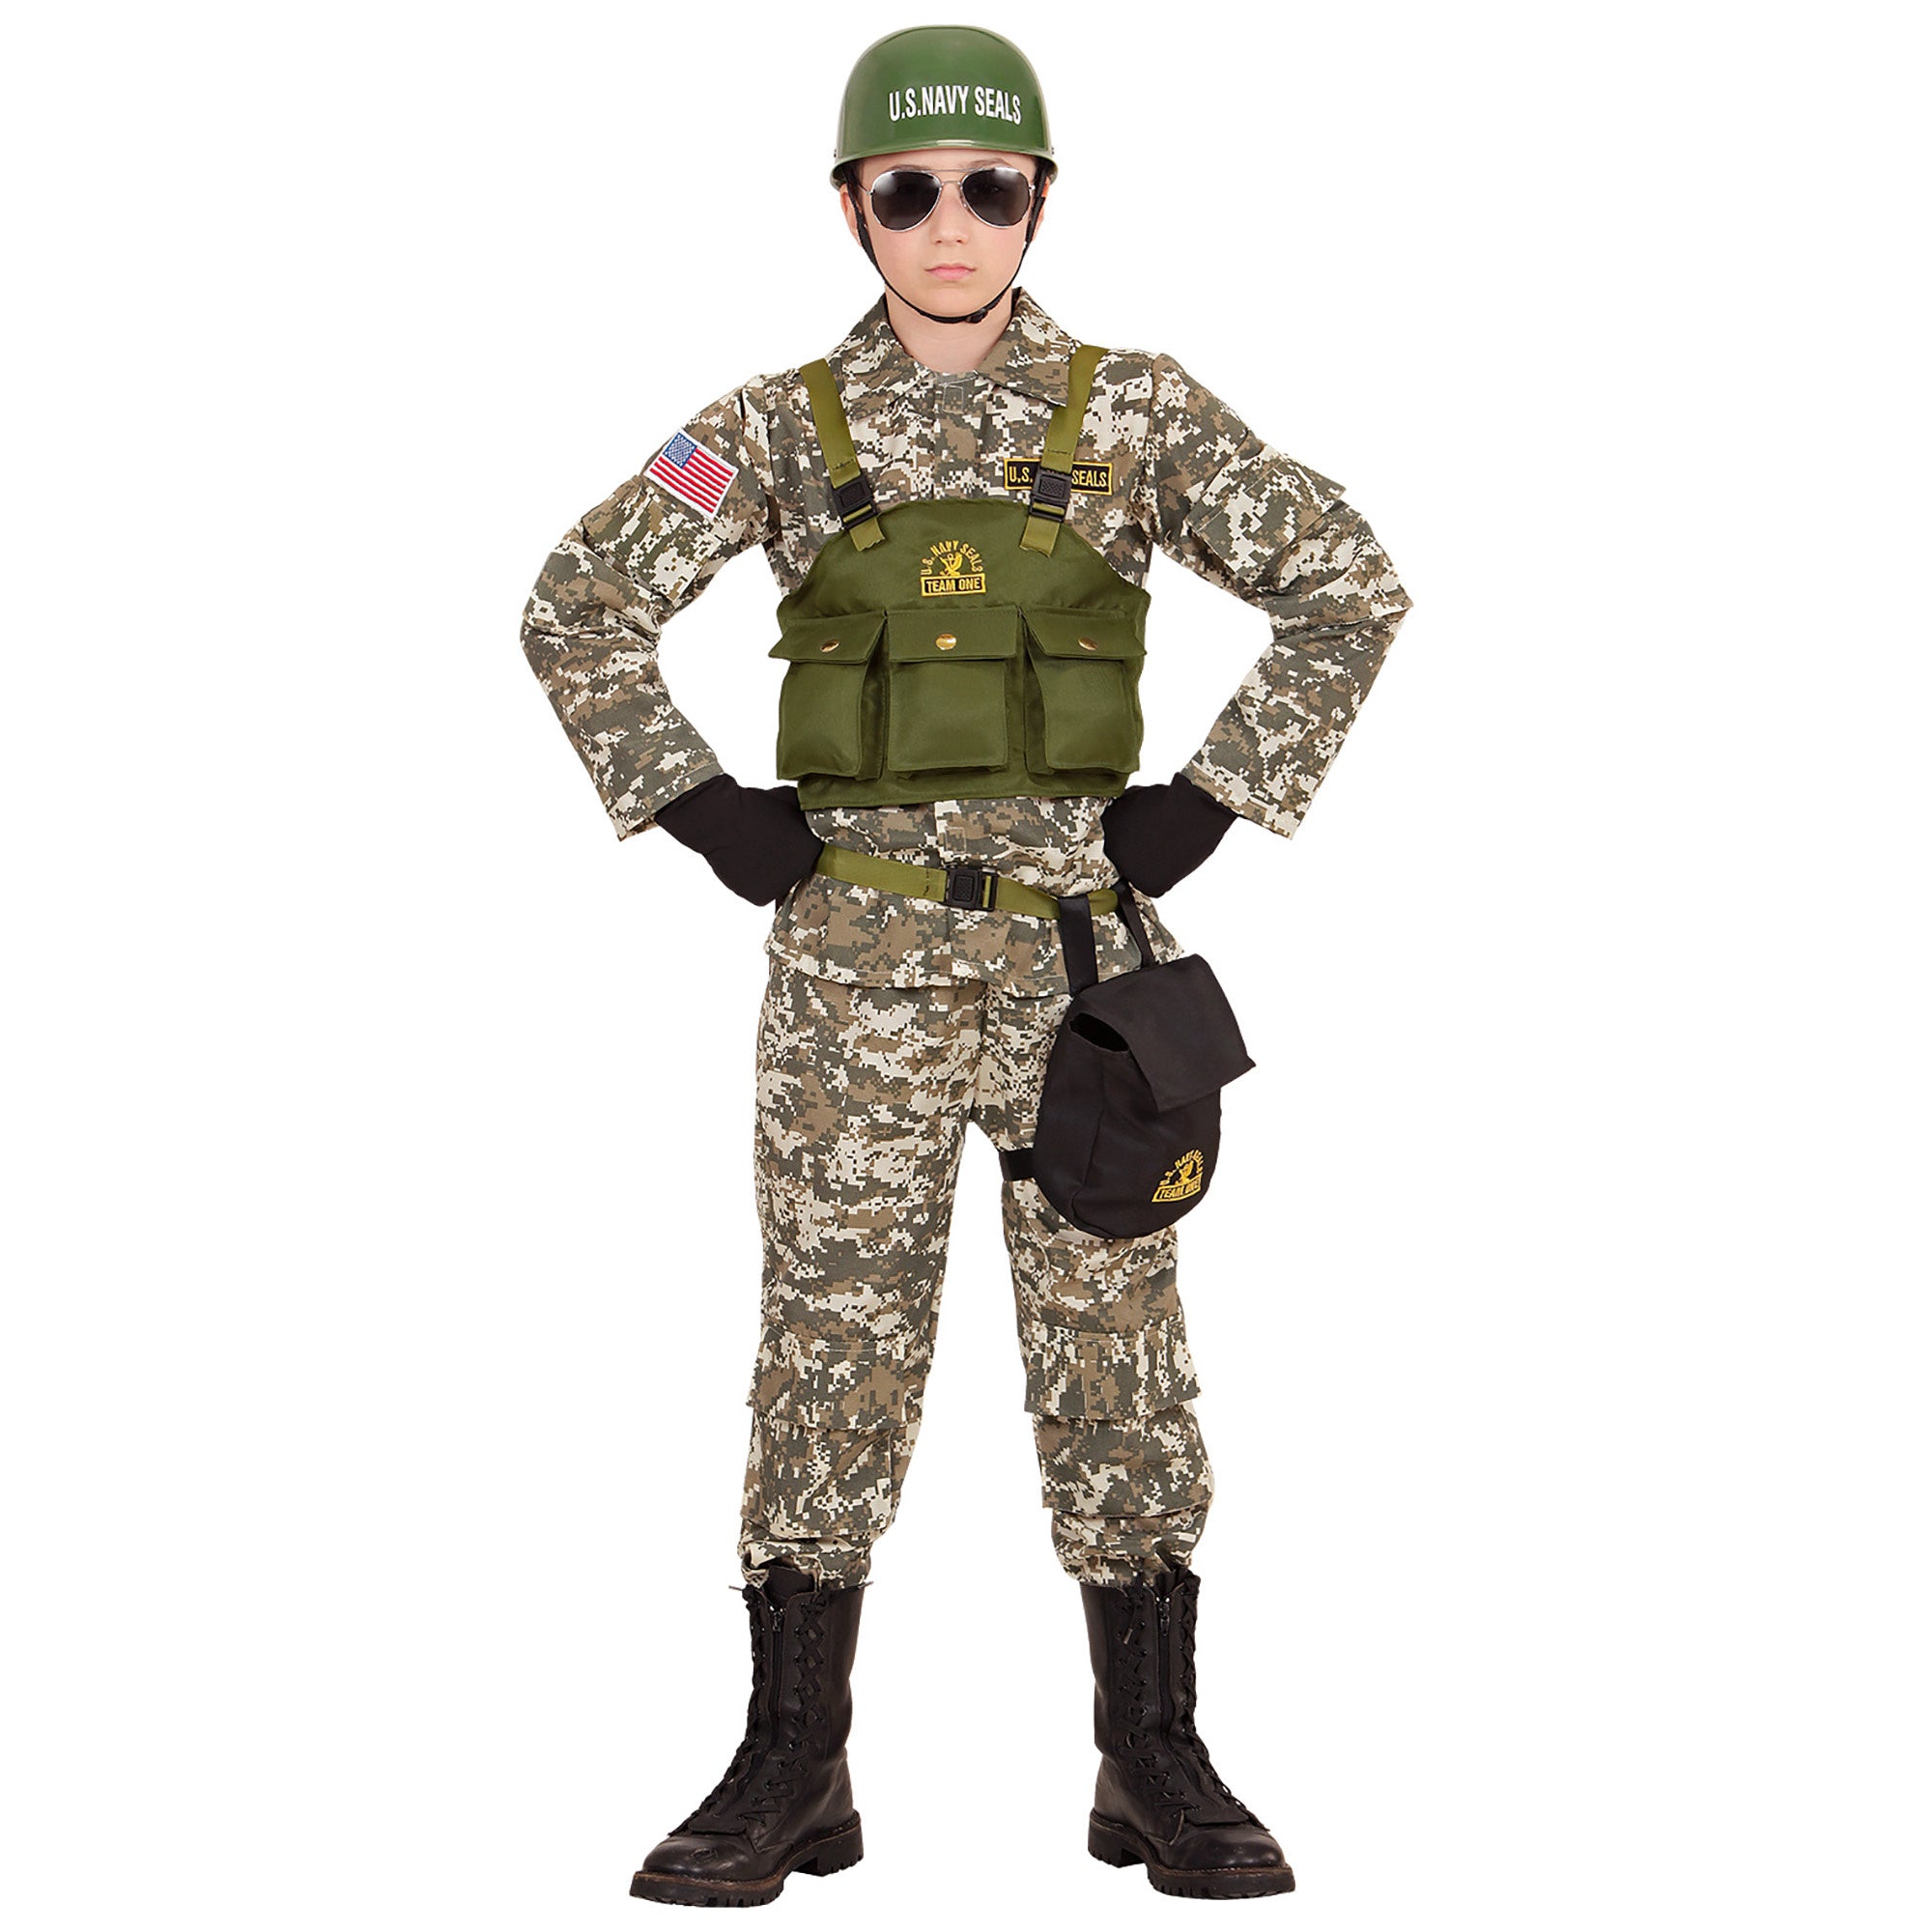 Widmann - Leger & Oorlog Kostuum - Dessert Navy Seals - Jongen - Bruin - Maat 128 - Carnavalskleding - Verkleedkleding